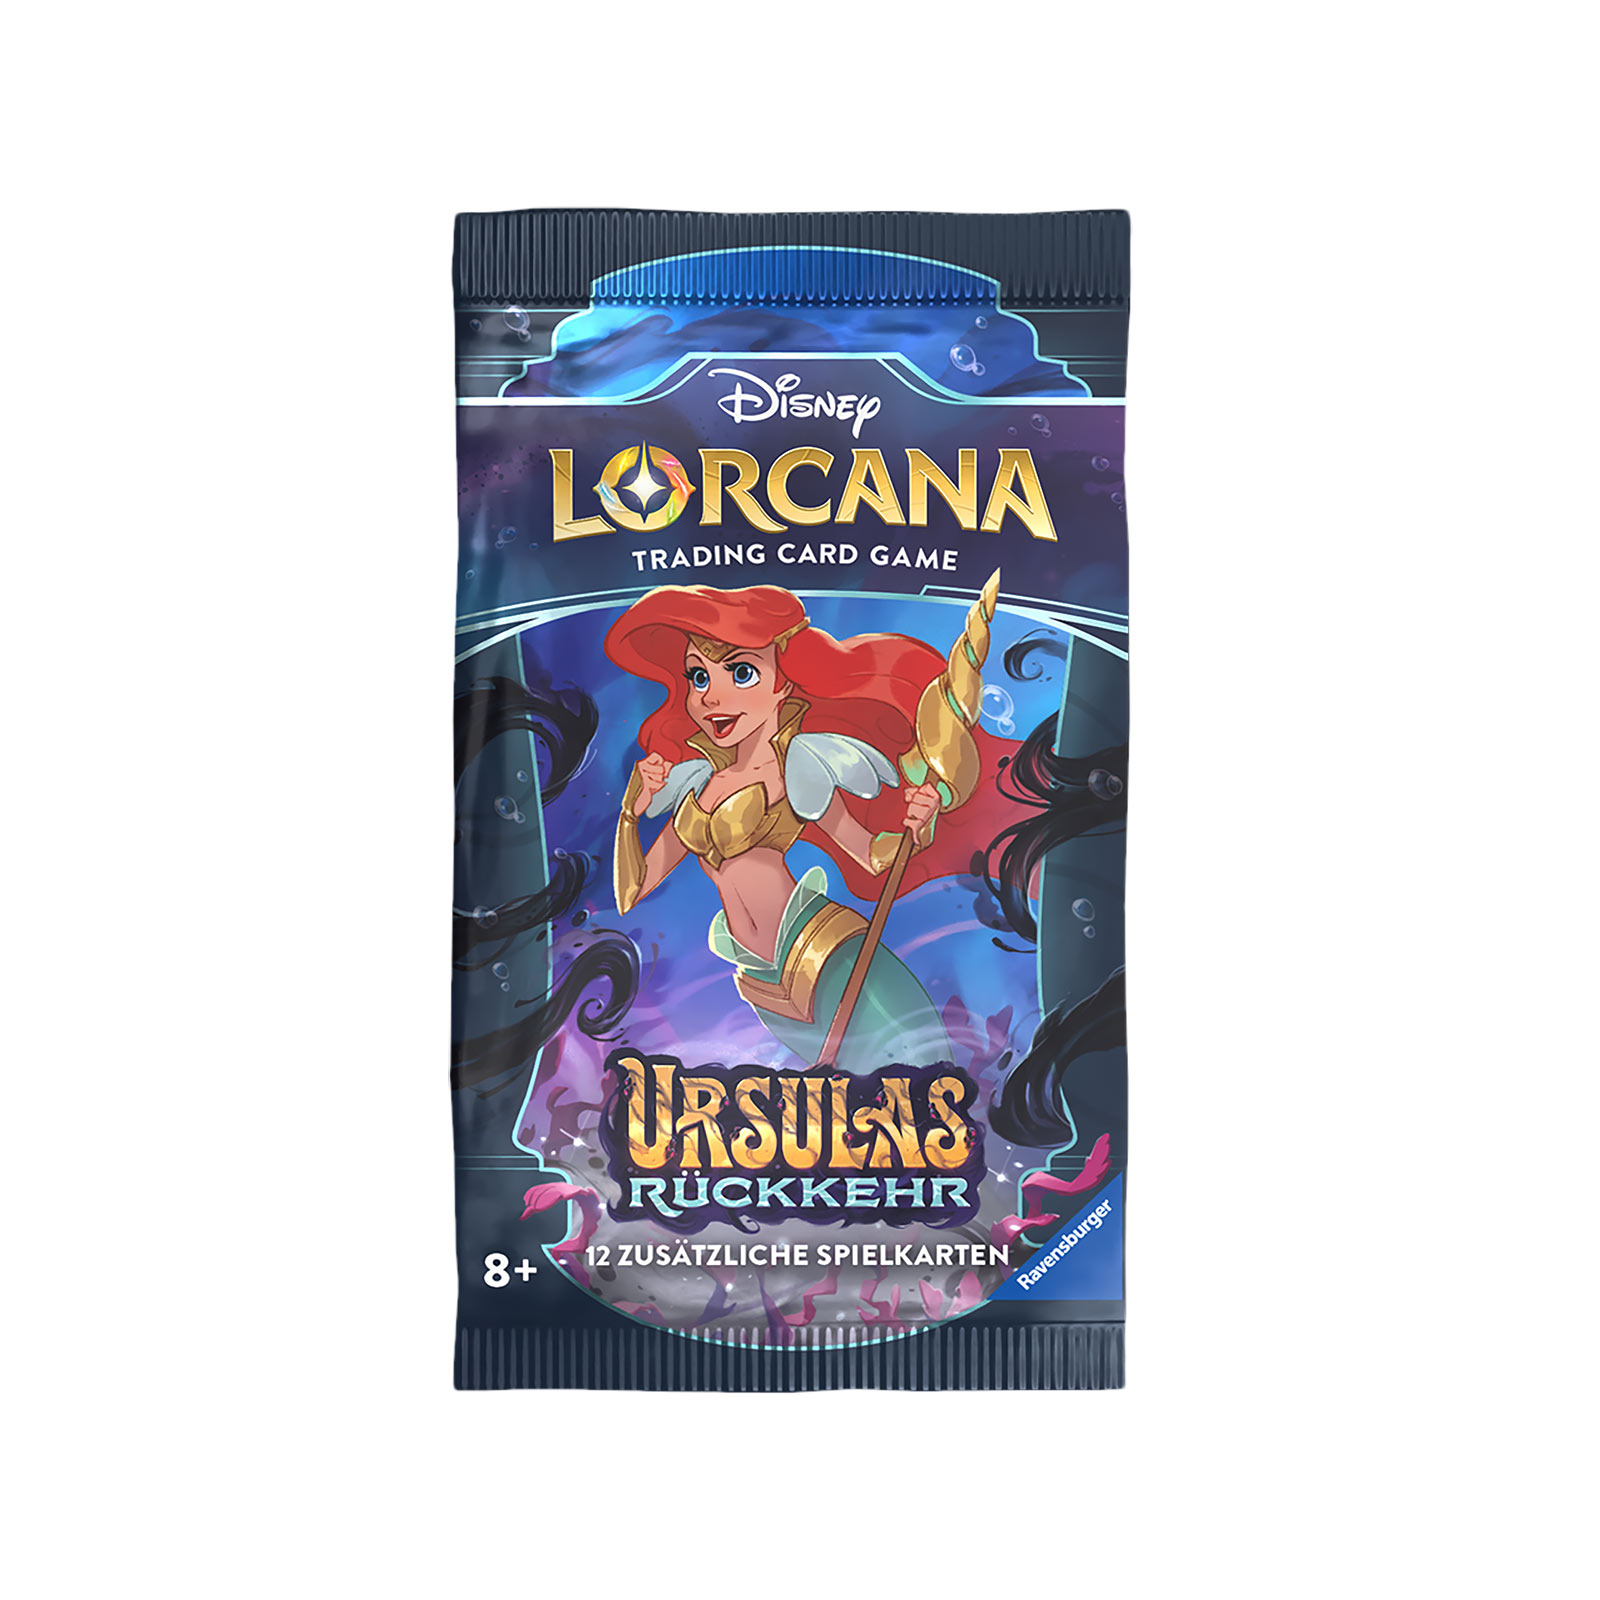 Disney Lorcana Booster - Ursula's Return Trading Card Game